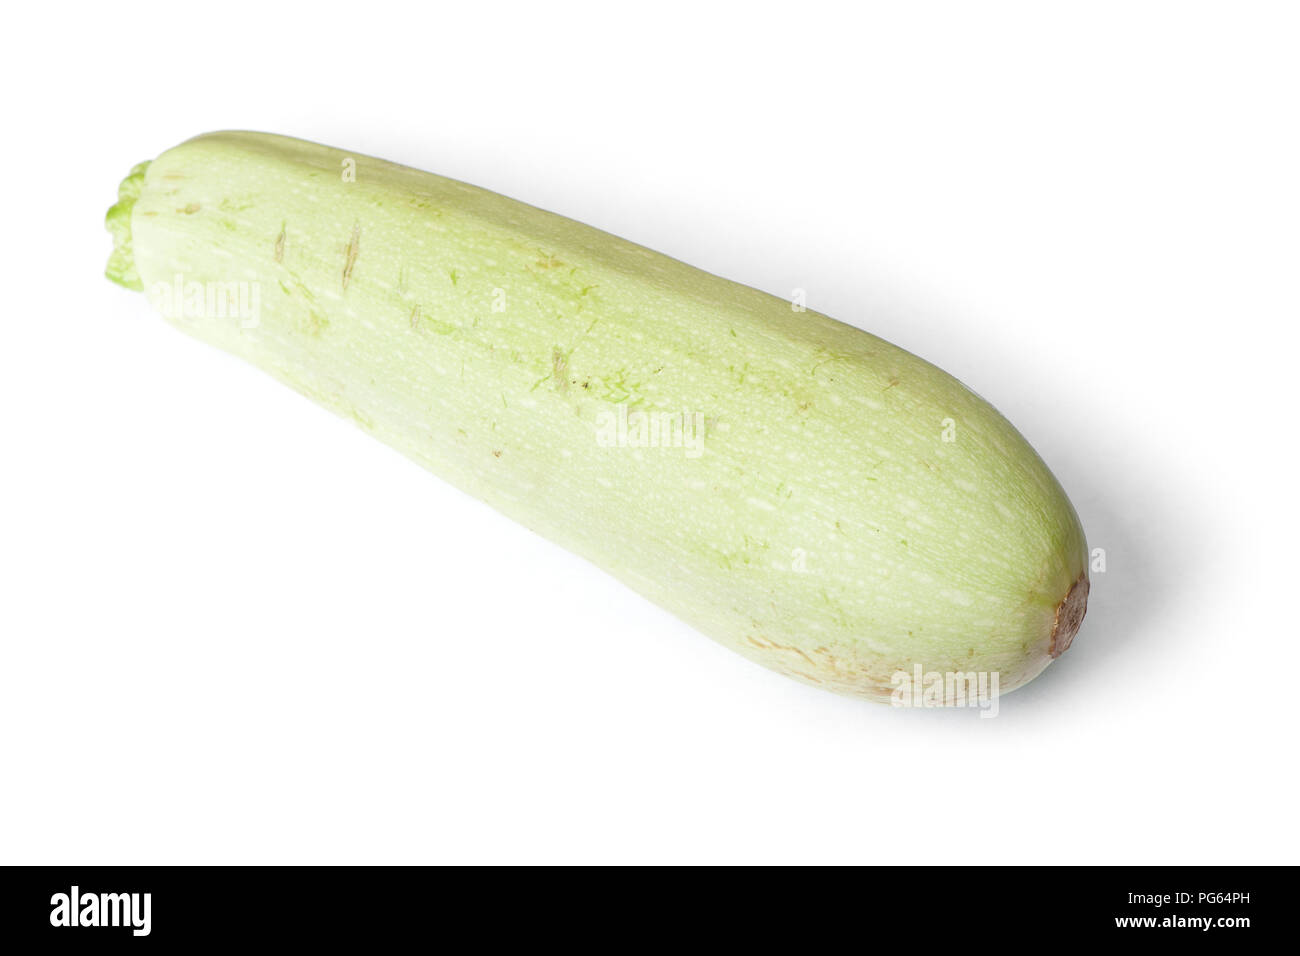 Single Marrow Squash, Peeler on Table Stock Image - Image of food, squash:  159439421